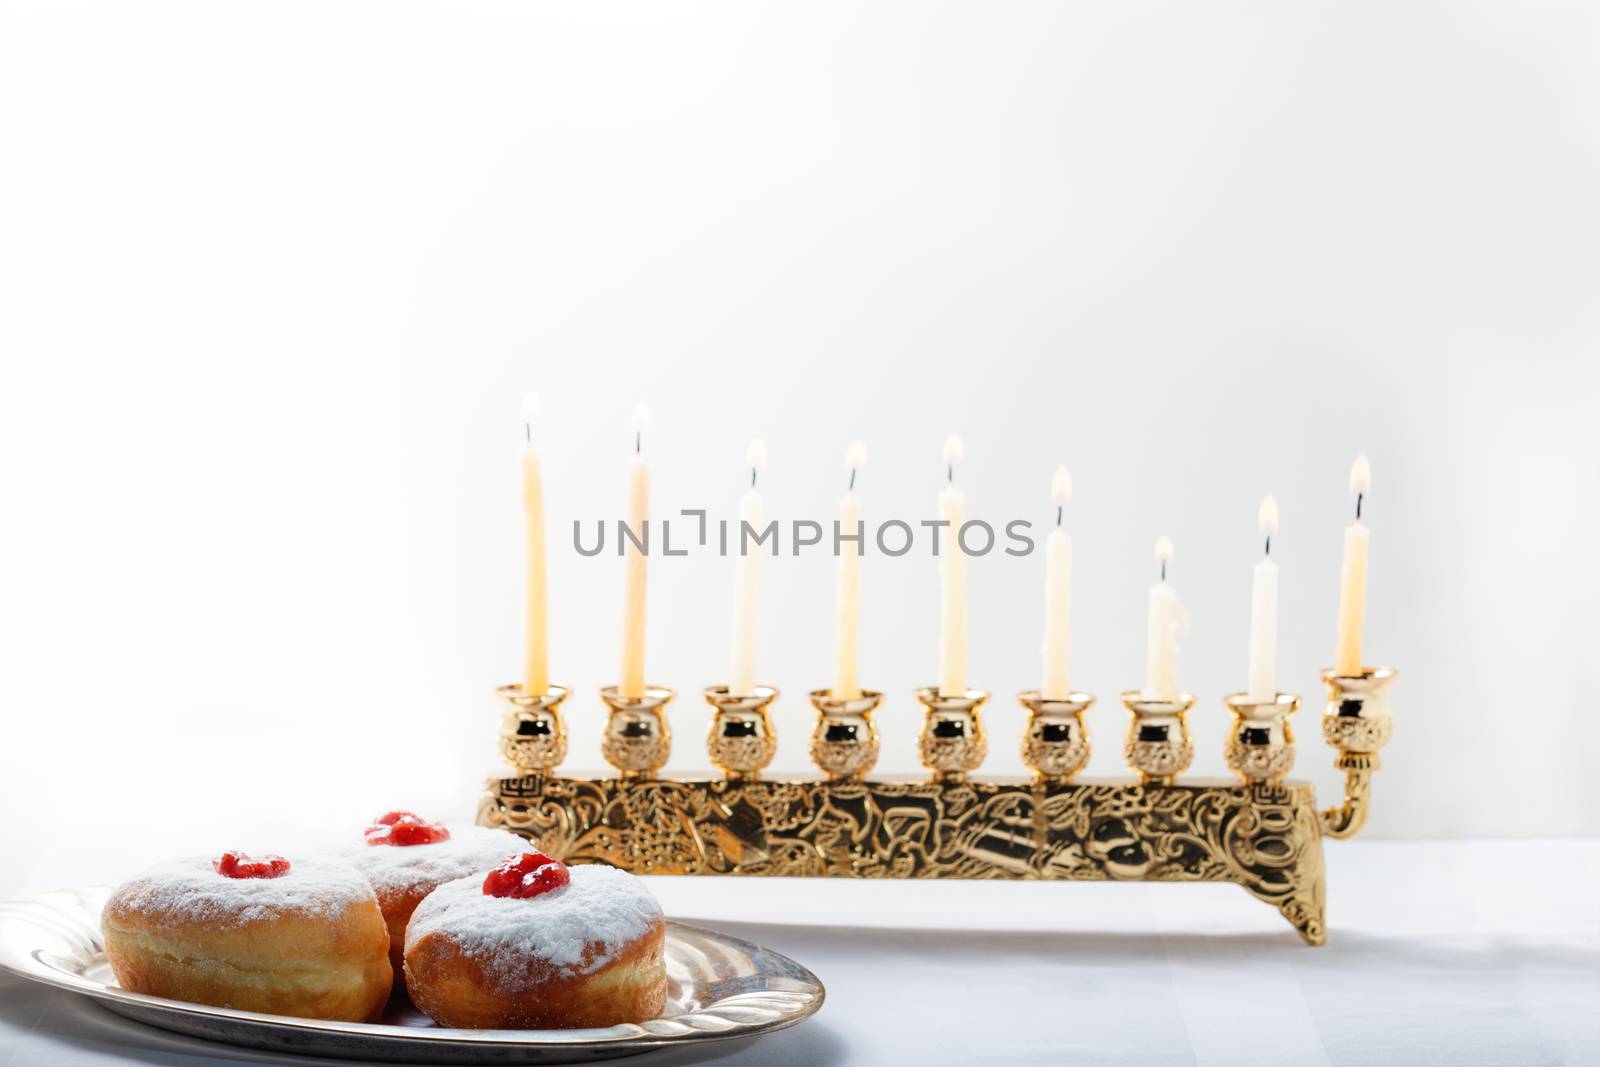 Sufganiyot and nine branched menora for Hanukkah